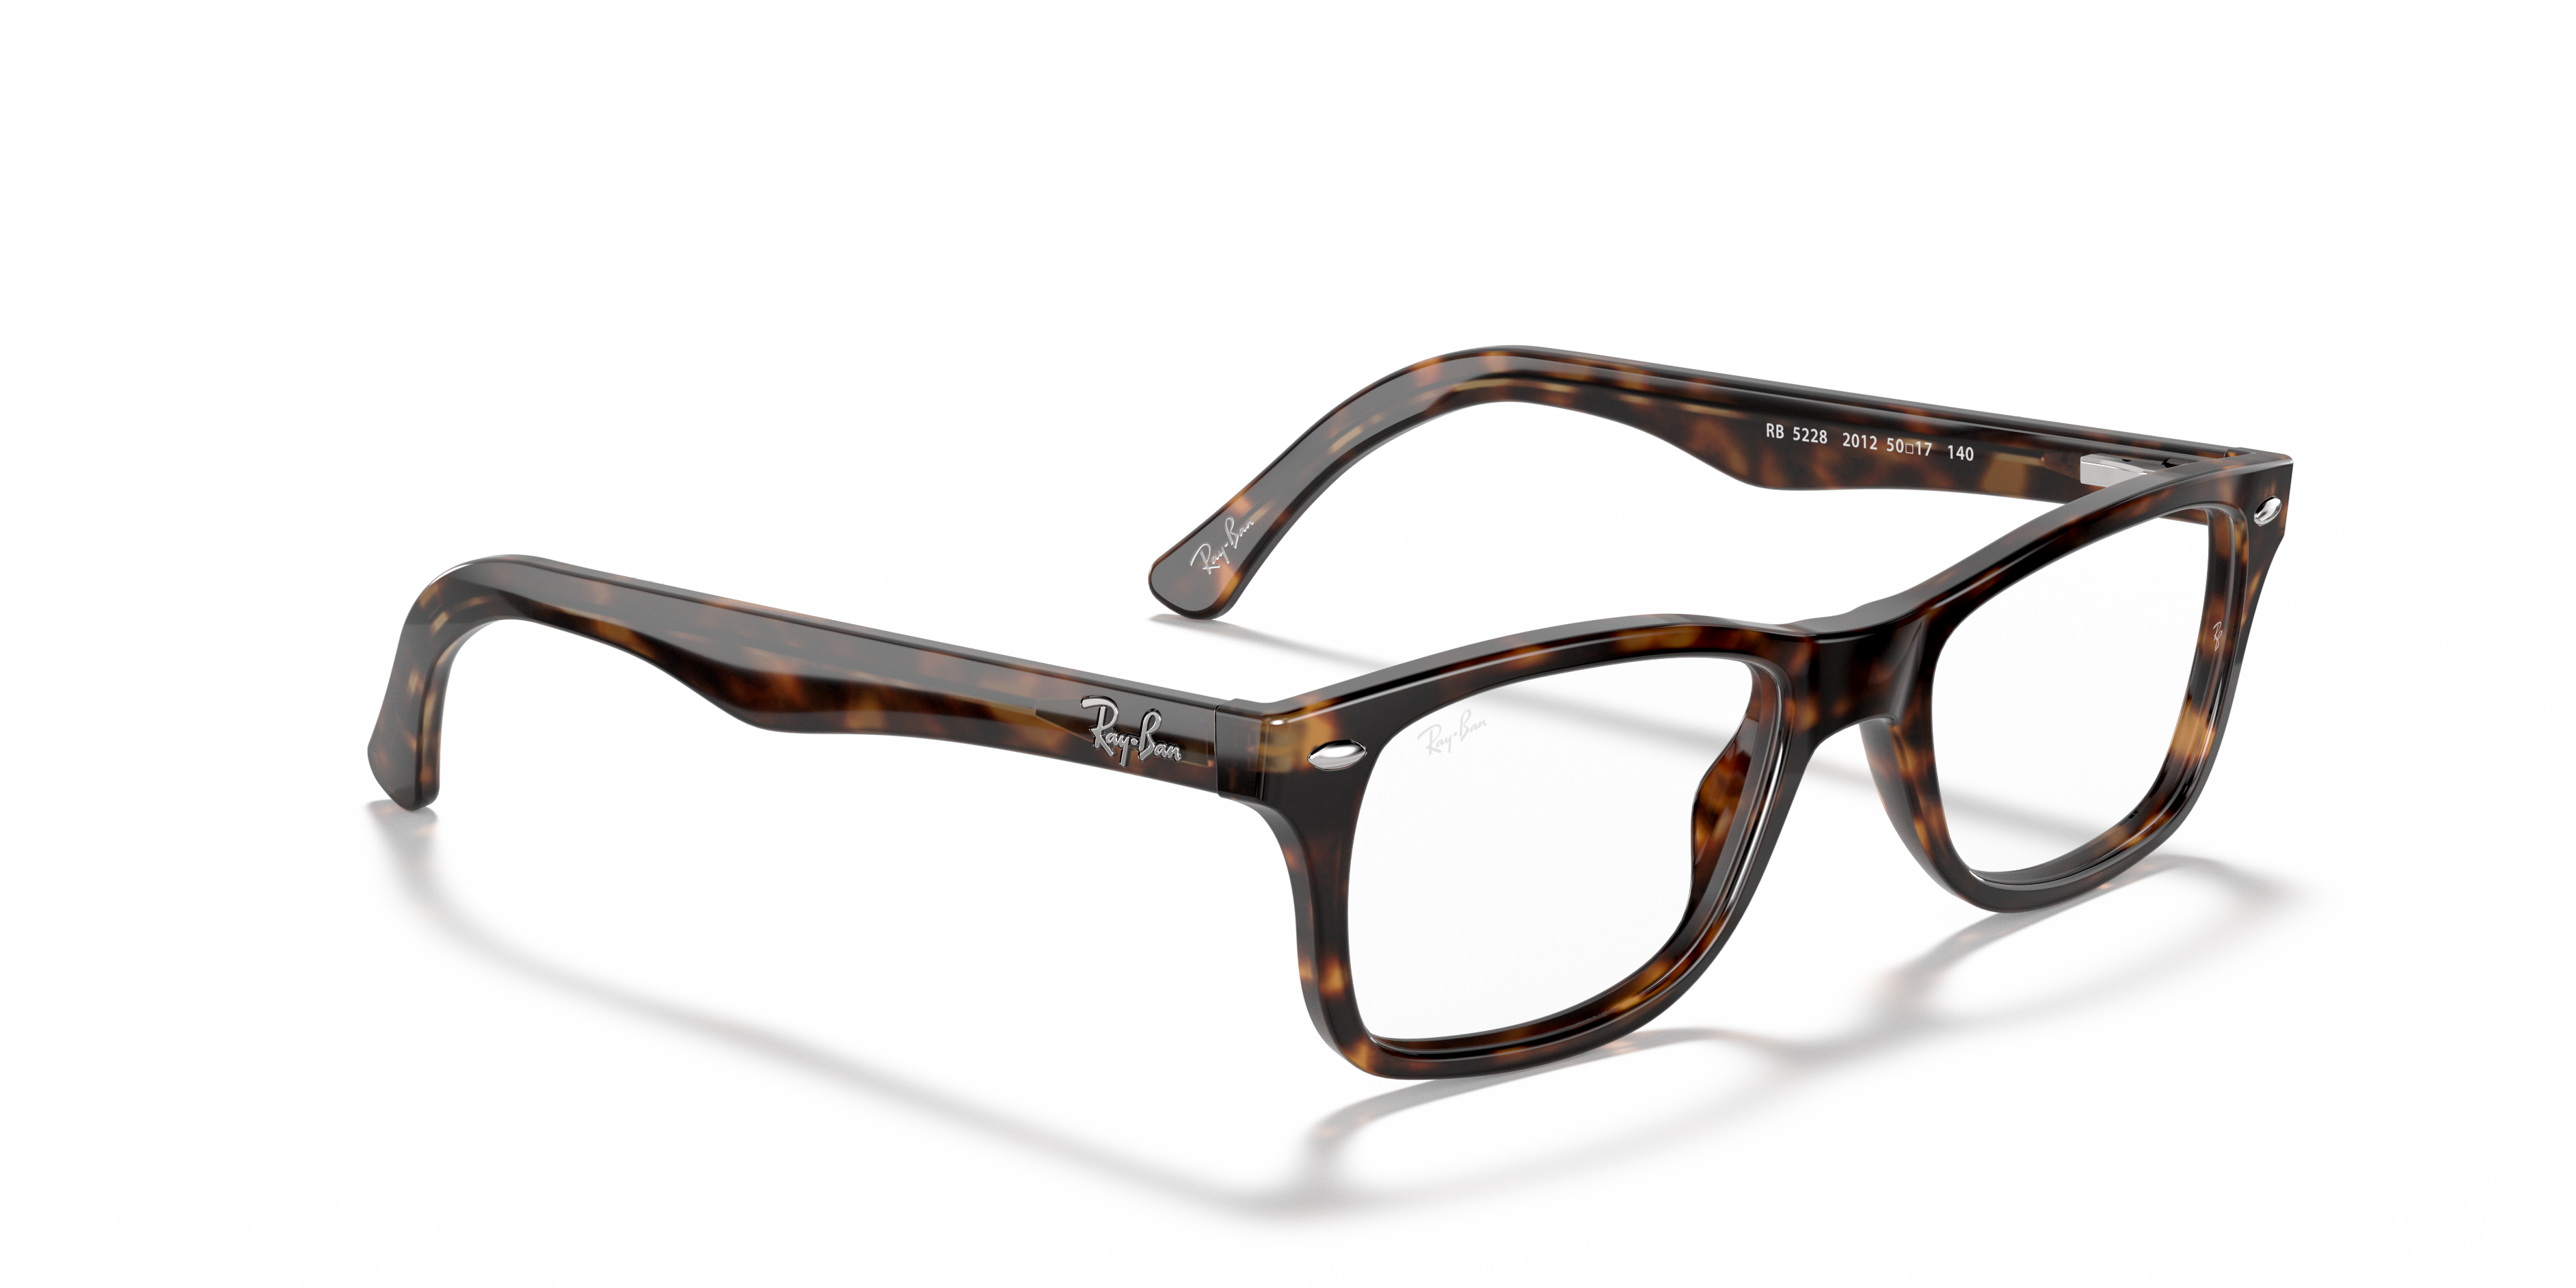 Rb5228 Optics Eyeglasses with Dark Havana Frame | Ray-Ban®